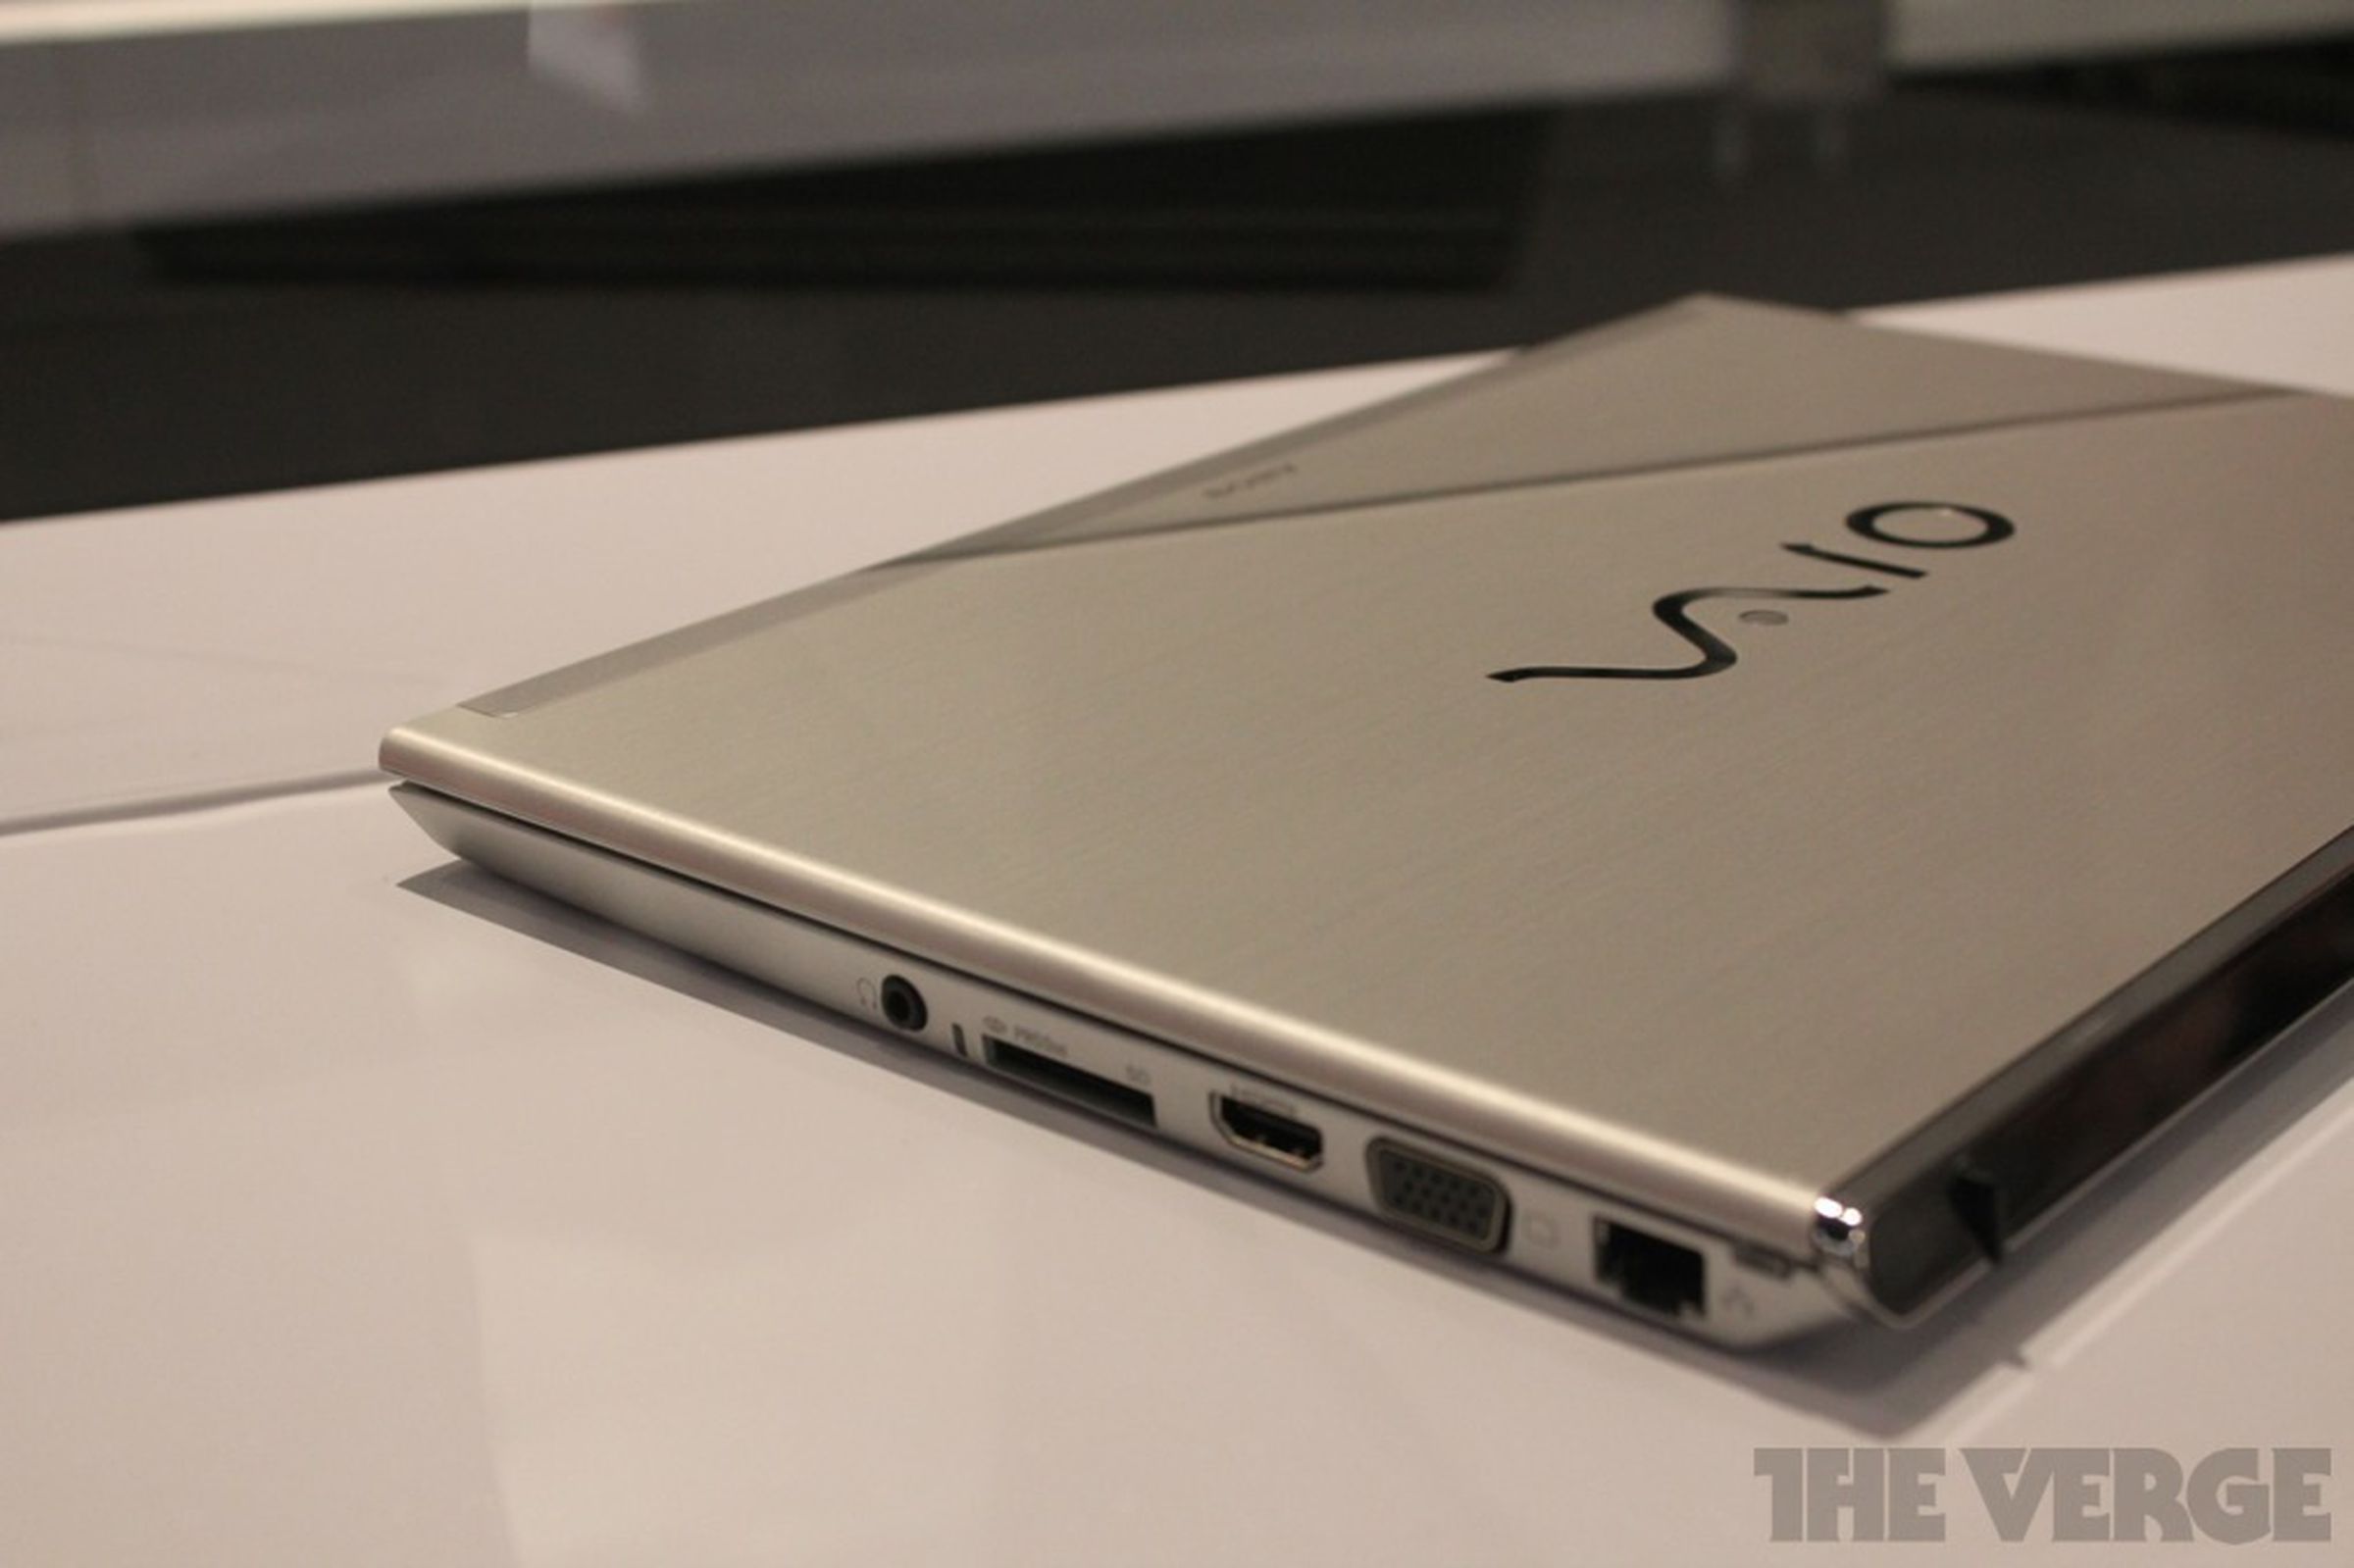 Sony ultrabook prototype photos